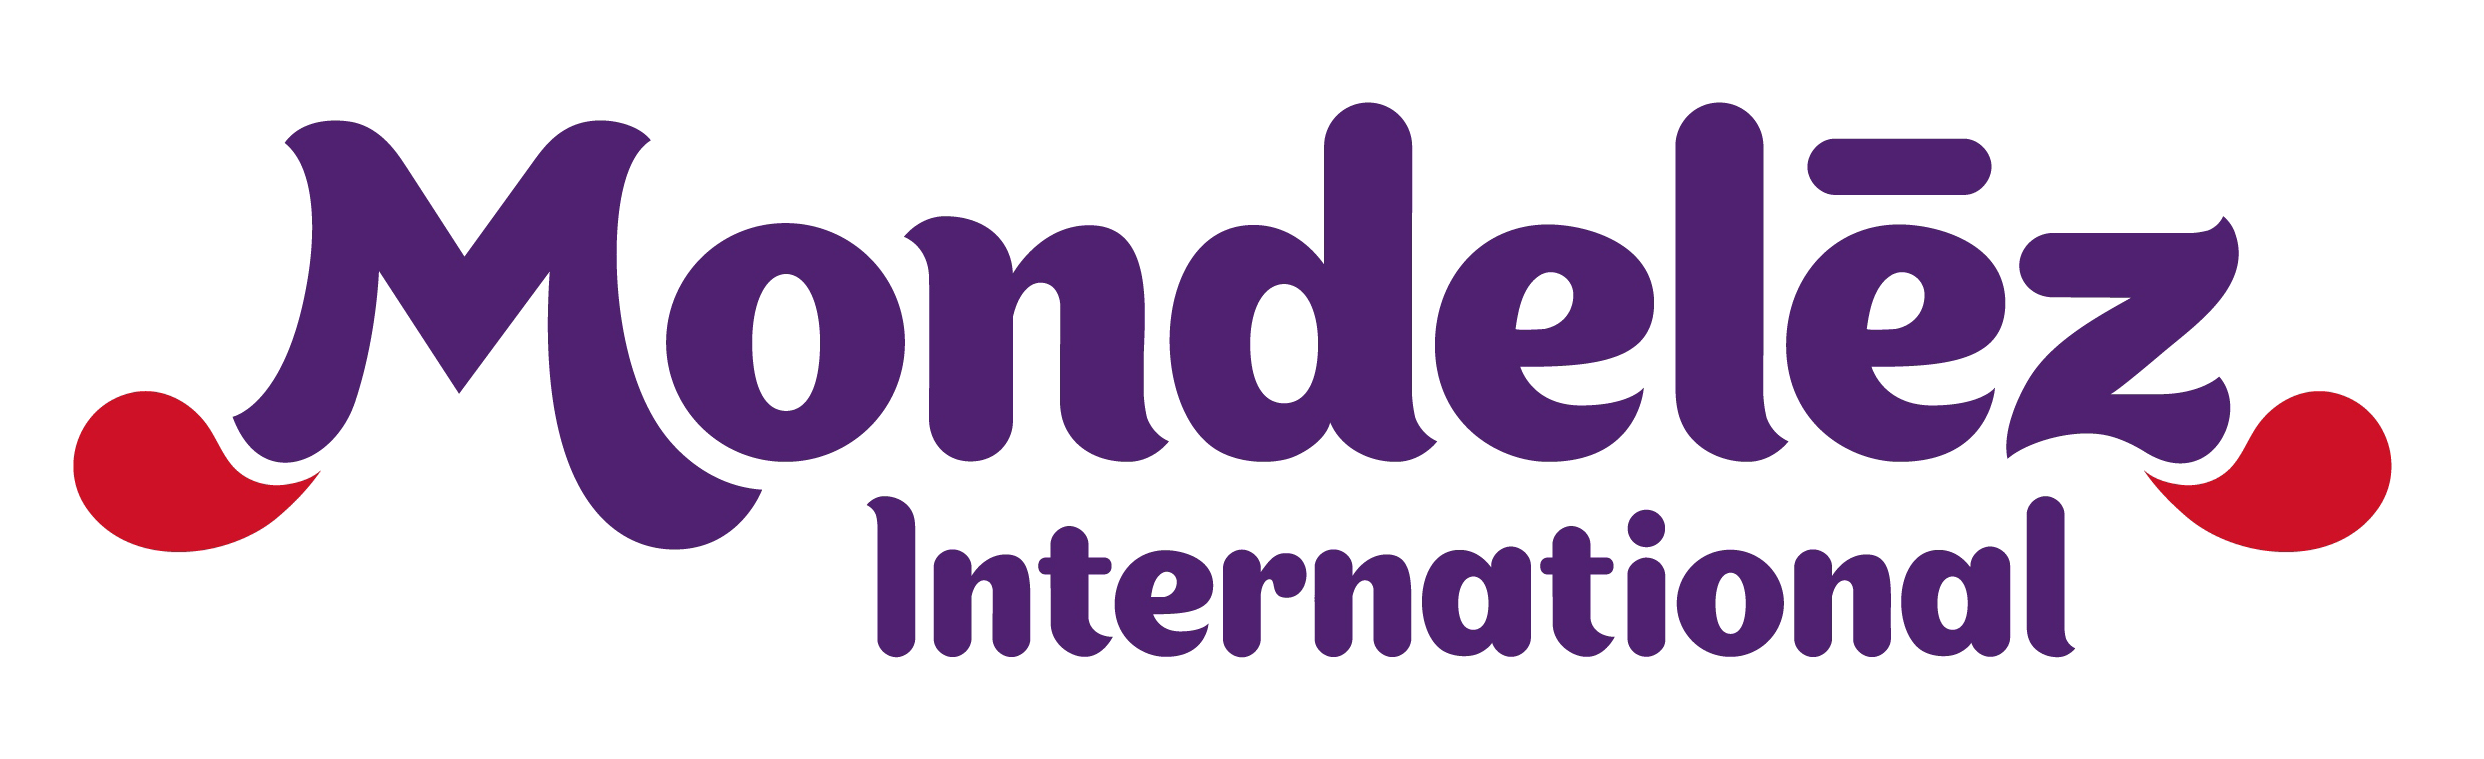 Download Mondelez International Logo Png Image For Free - Mondelez, Transparent background PNG HD thumbnail